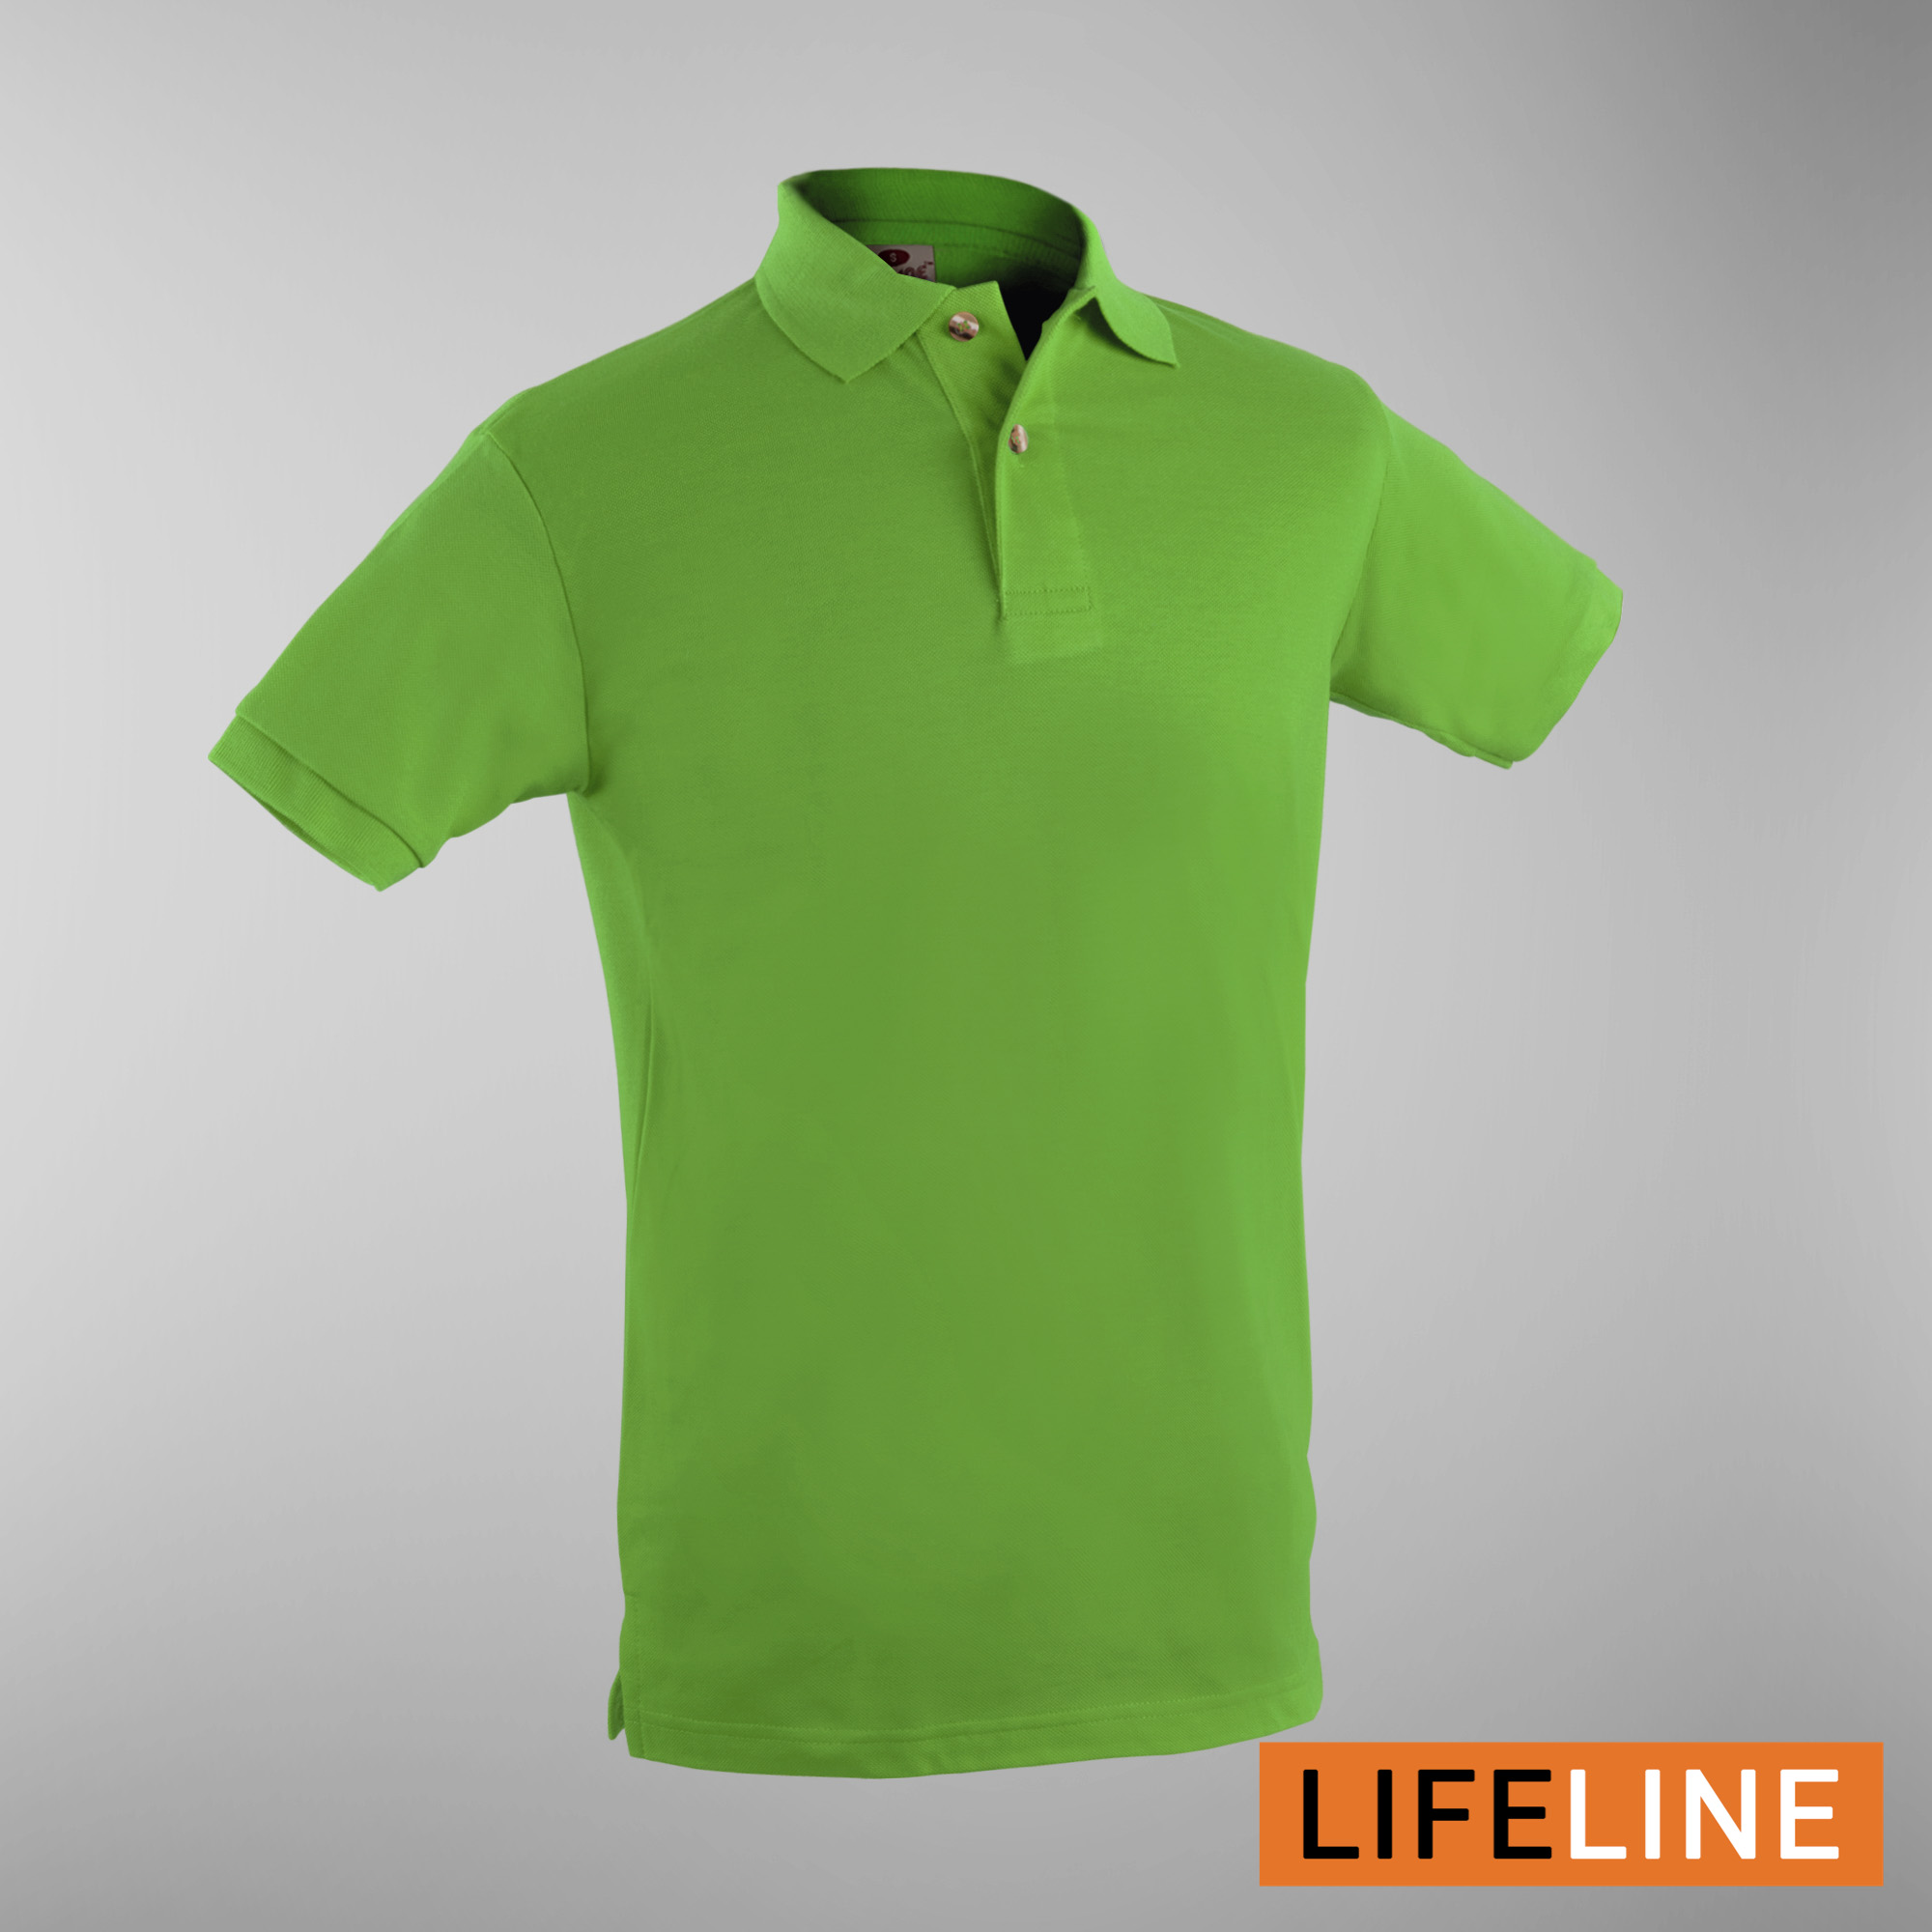 Lifeline Men’s Poloshirt (Neon Green)